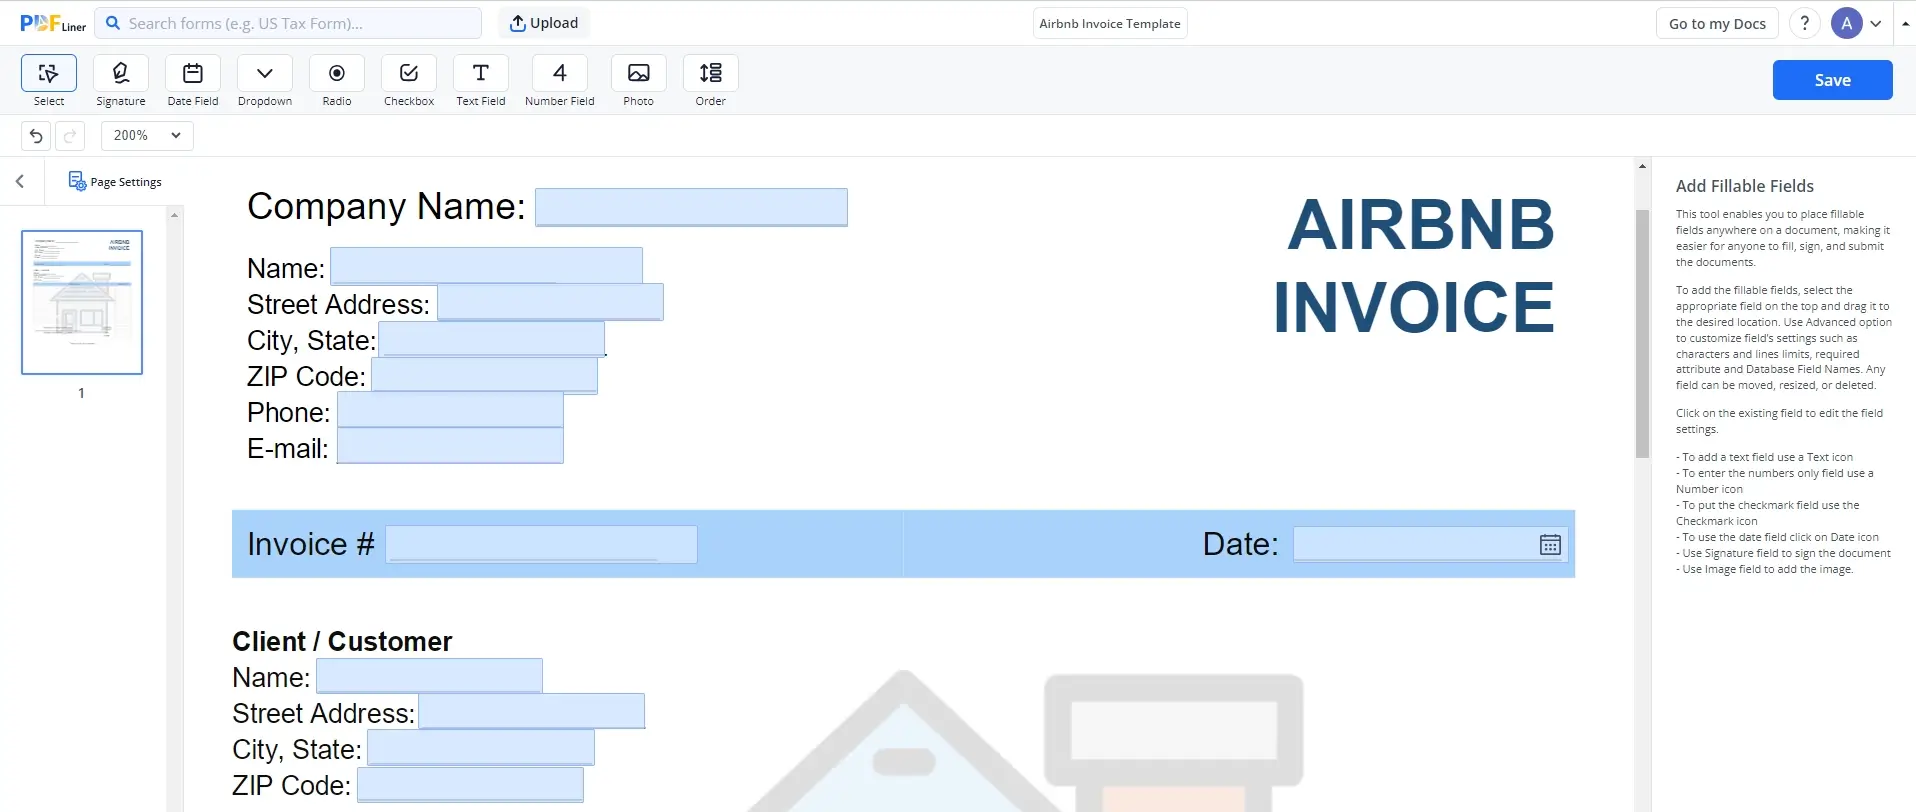 airbnb invoice template screenshot